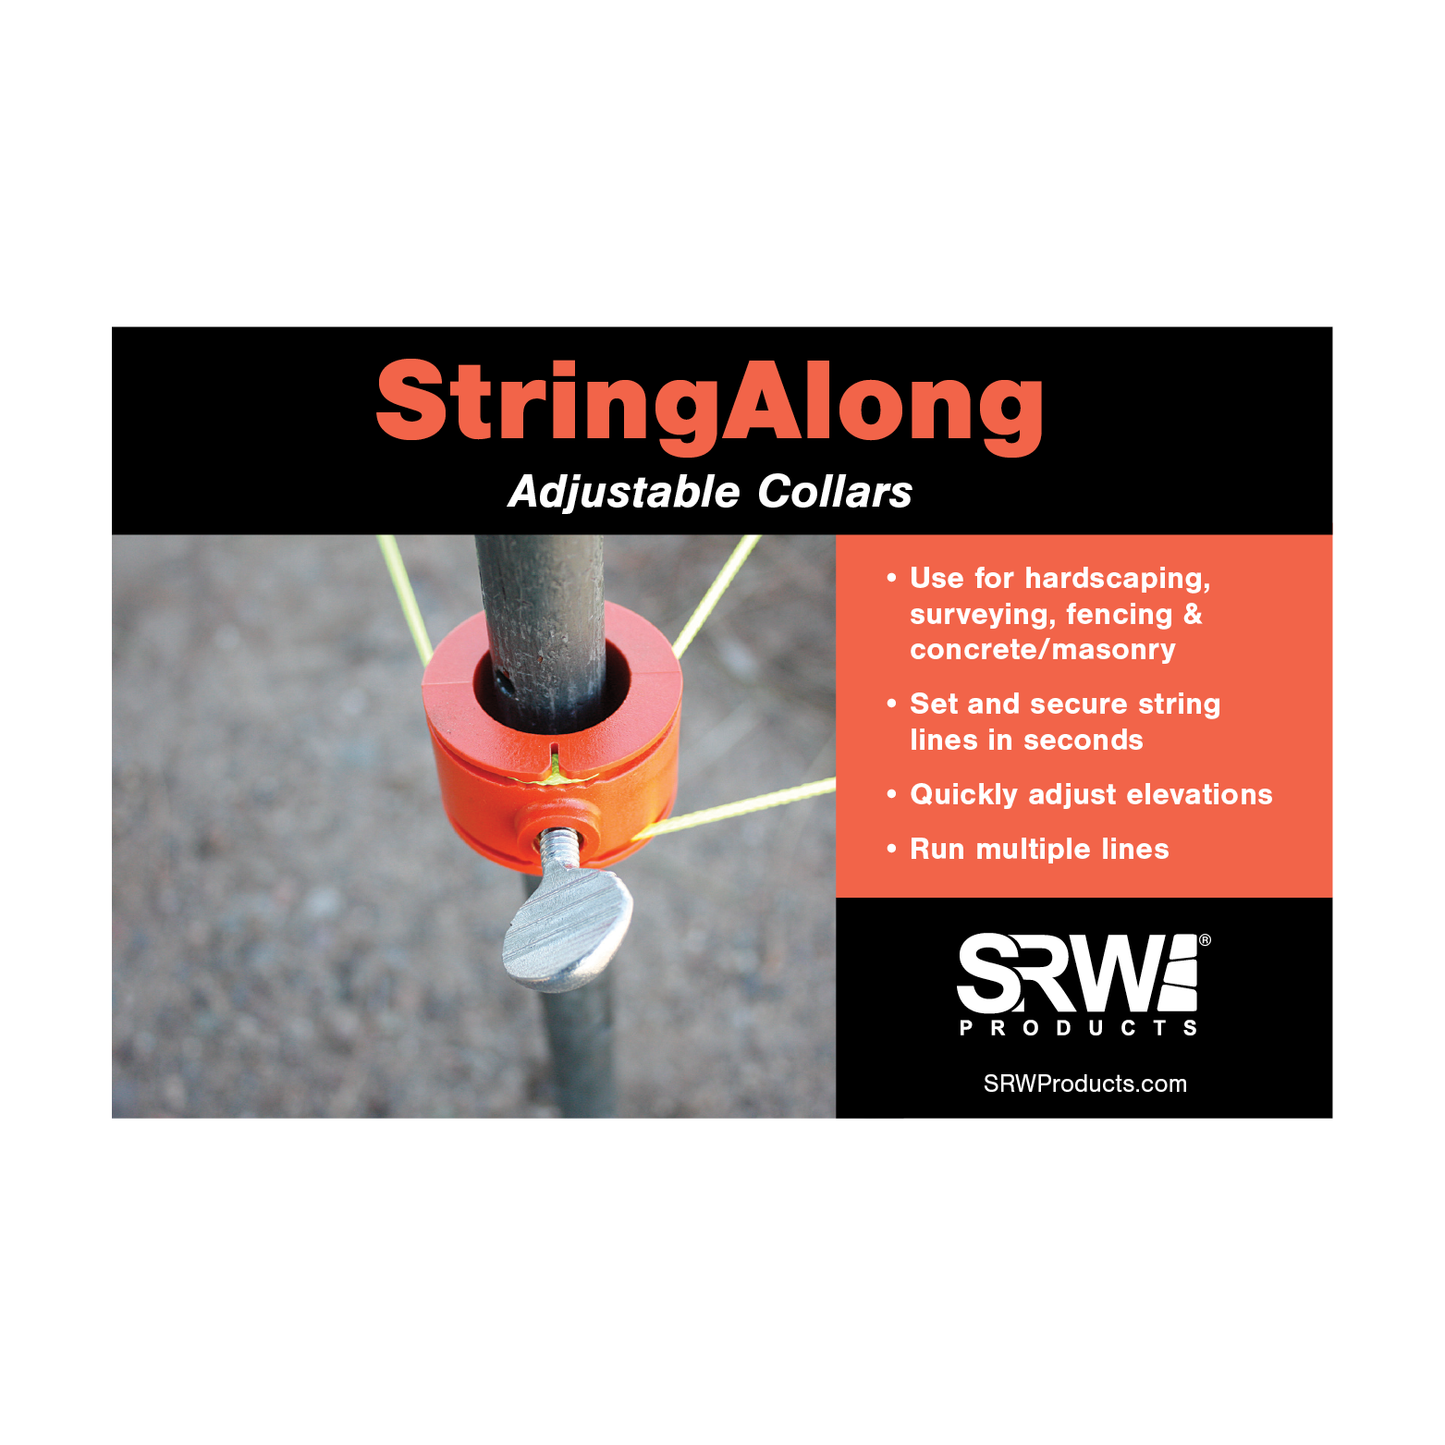 Information on string along adjustable collars